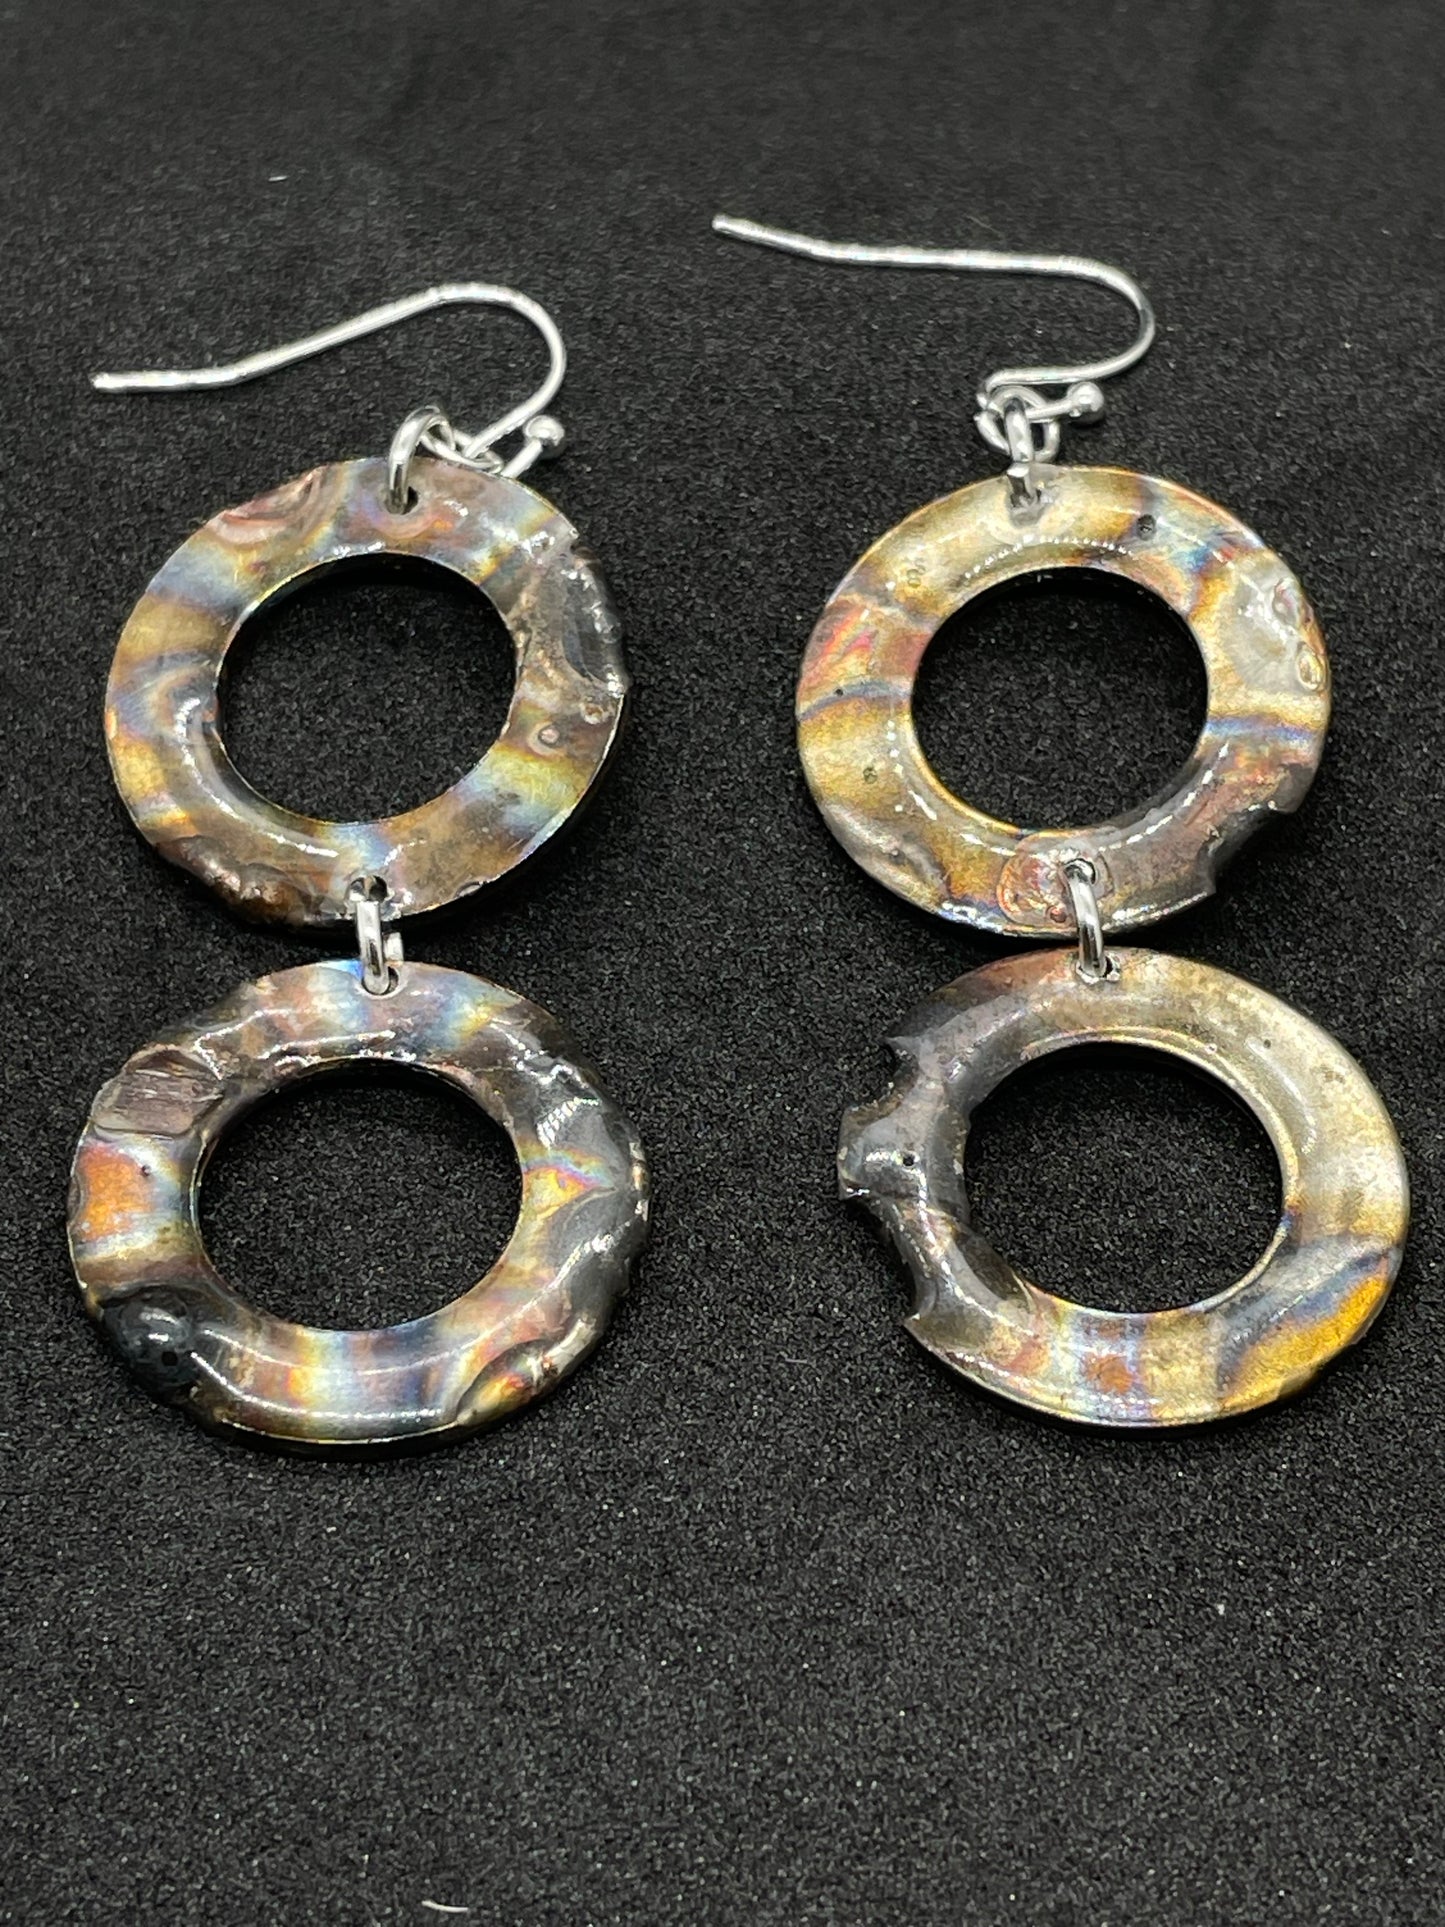 2 ring annealed steel drop earrings, with resin.